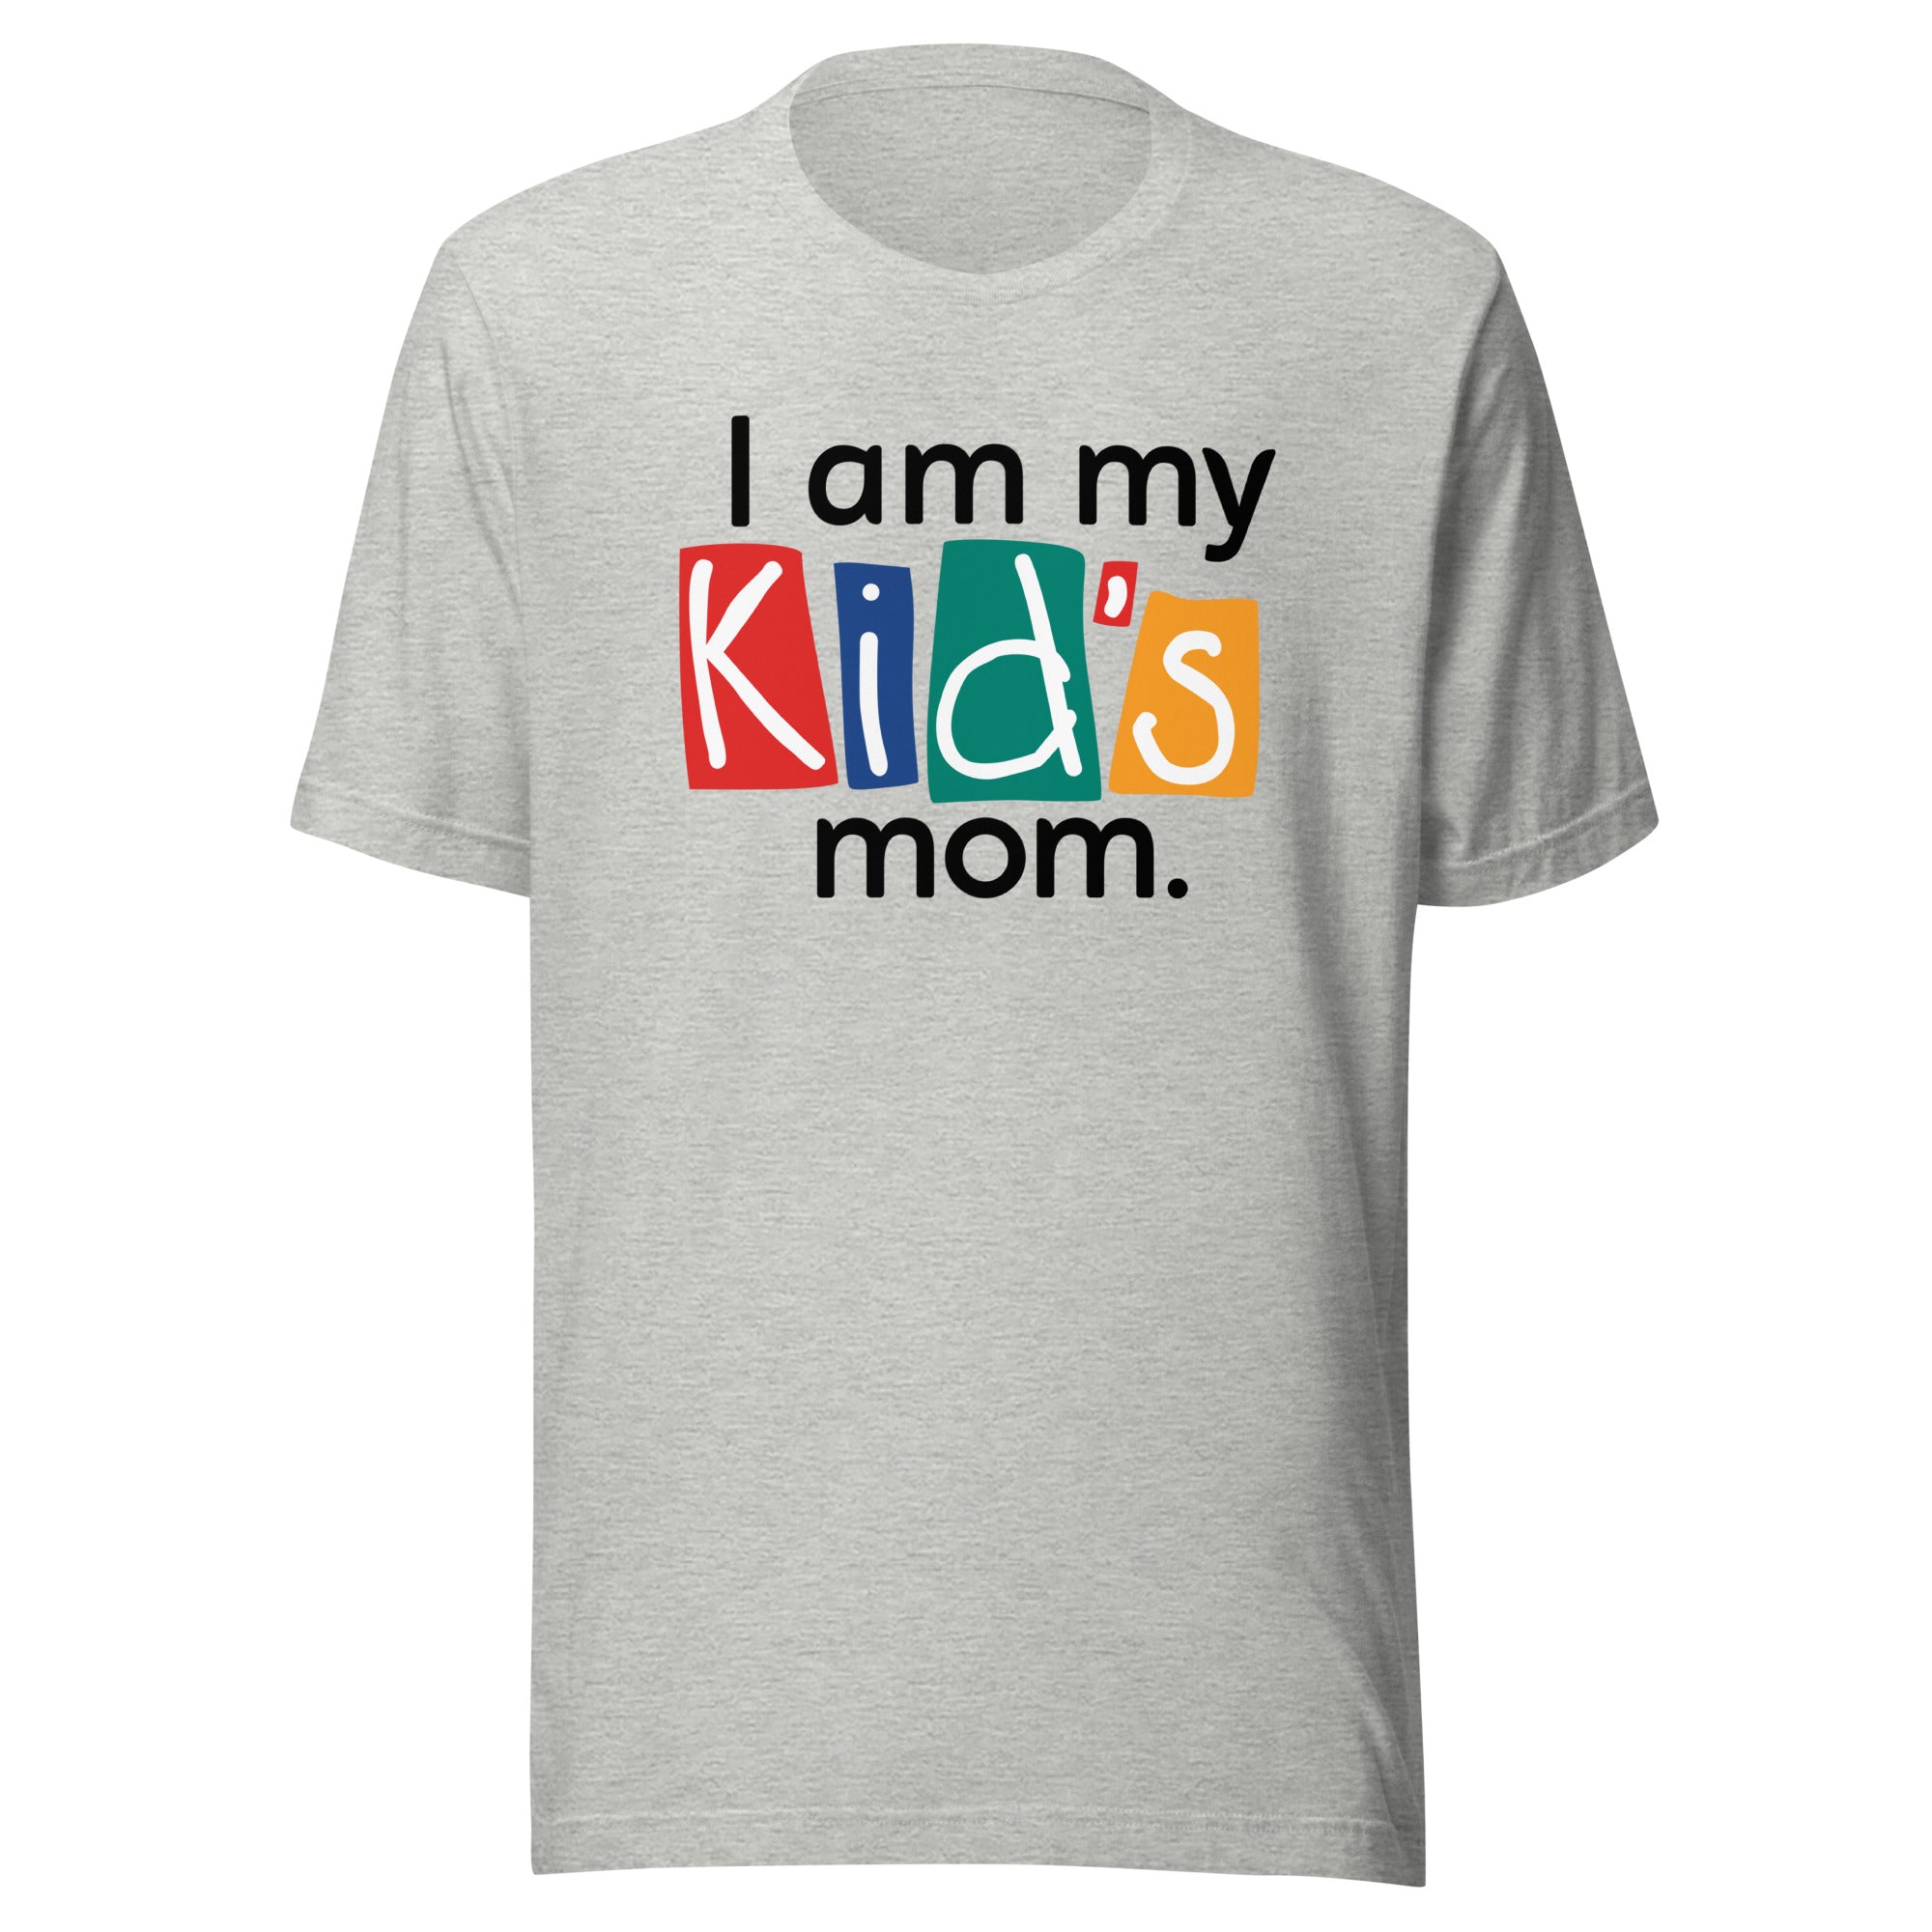 Dr. Laura: My Kid's Mom T-shirt